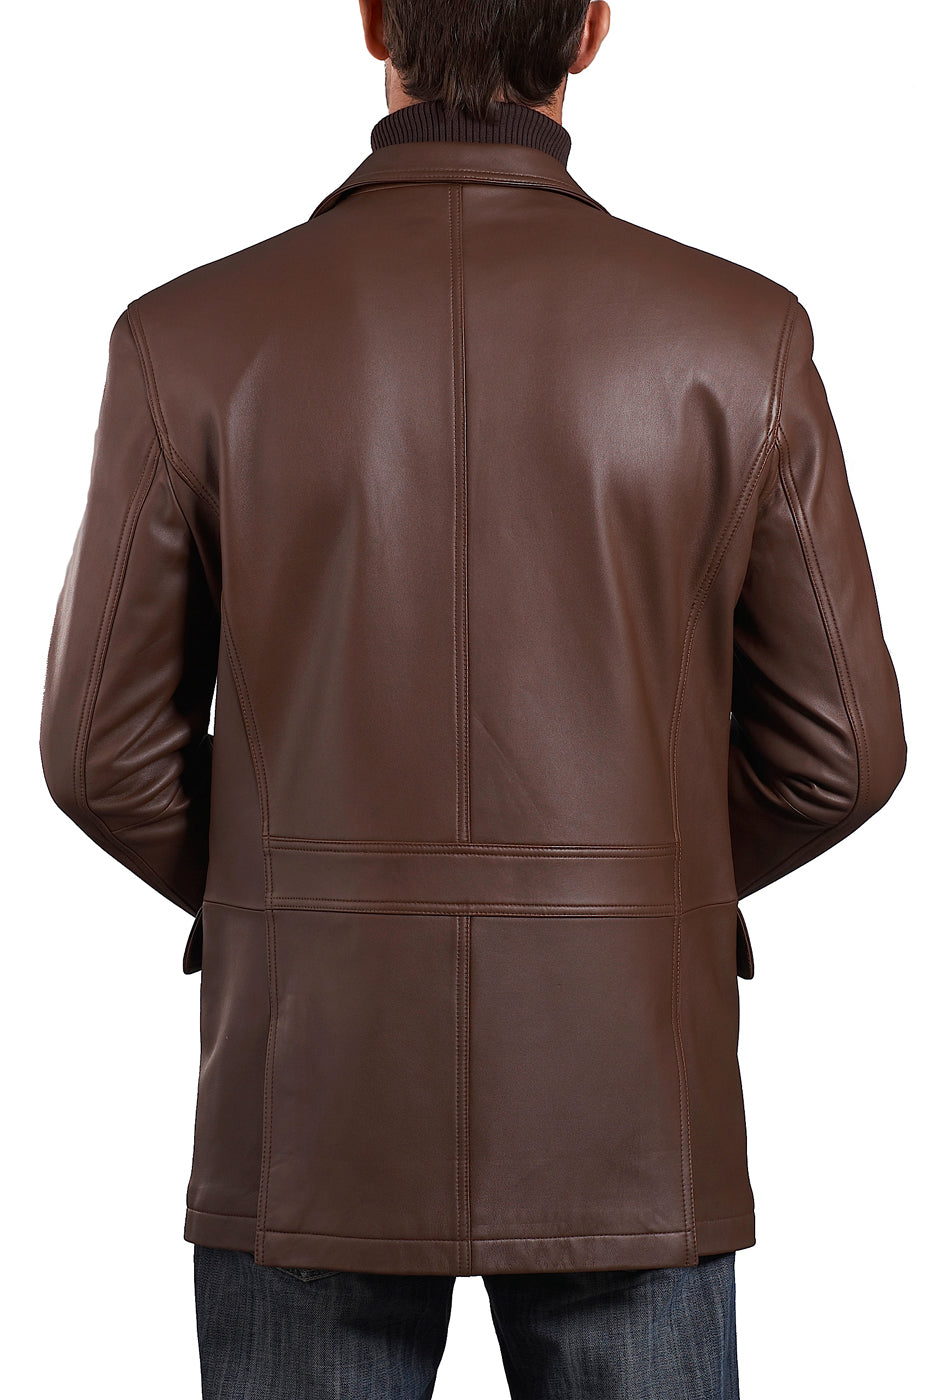 BGSD Men Grant Two-Button Leather Blazer